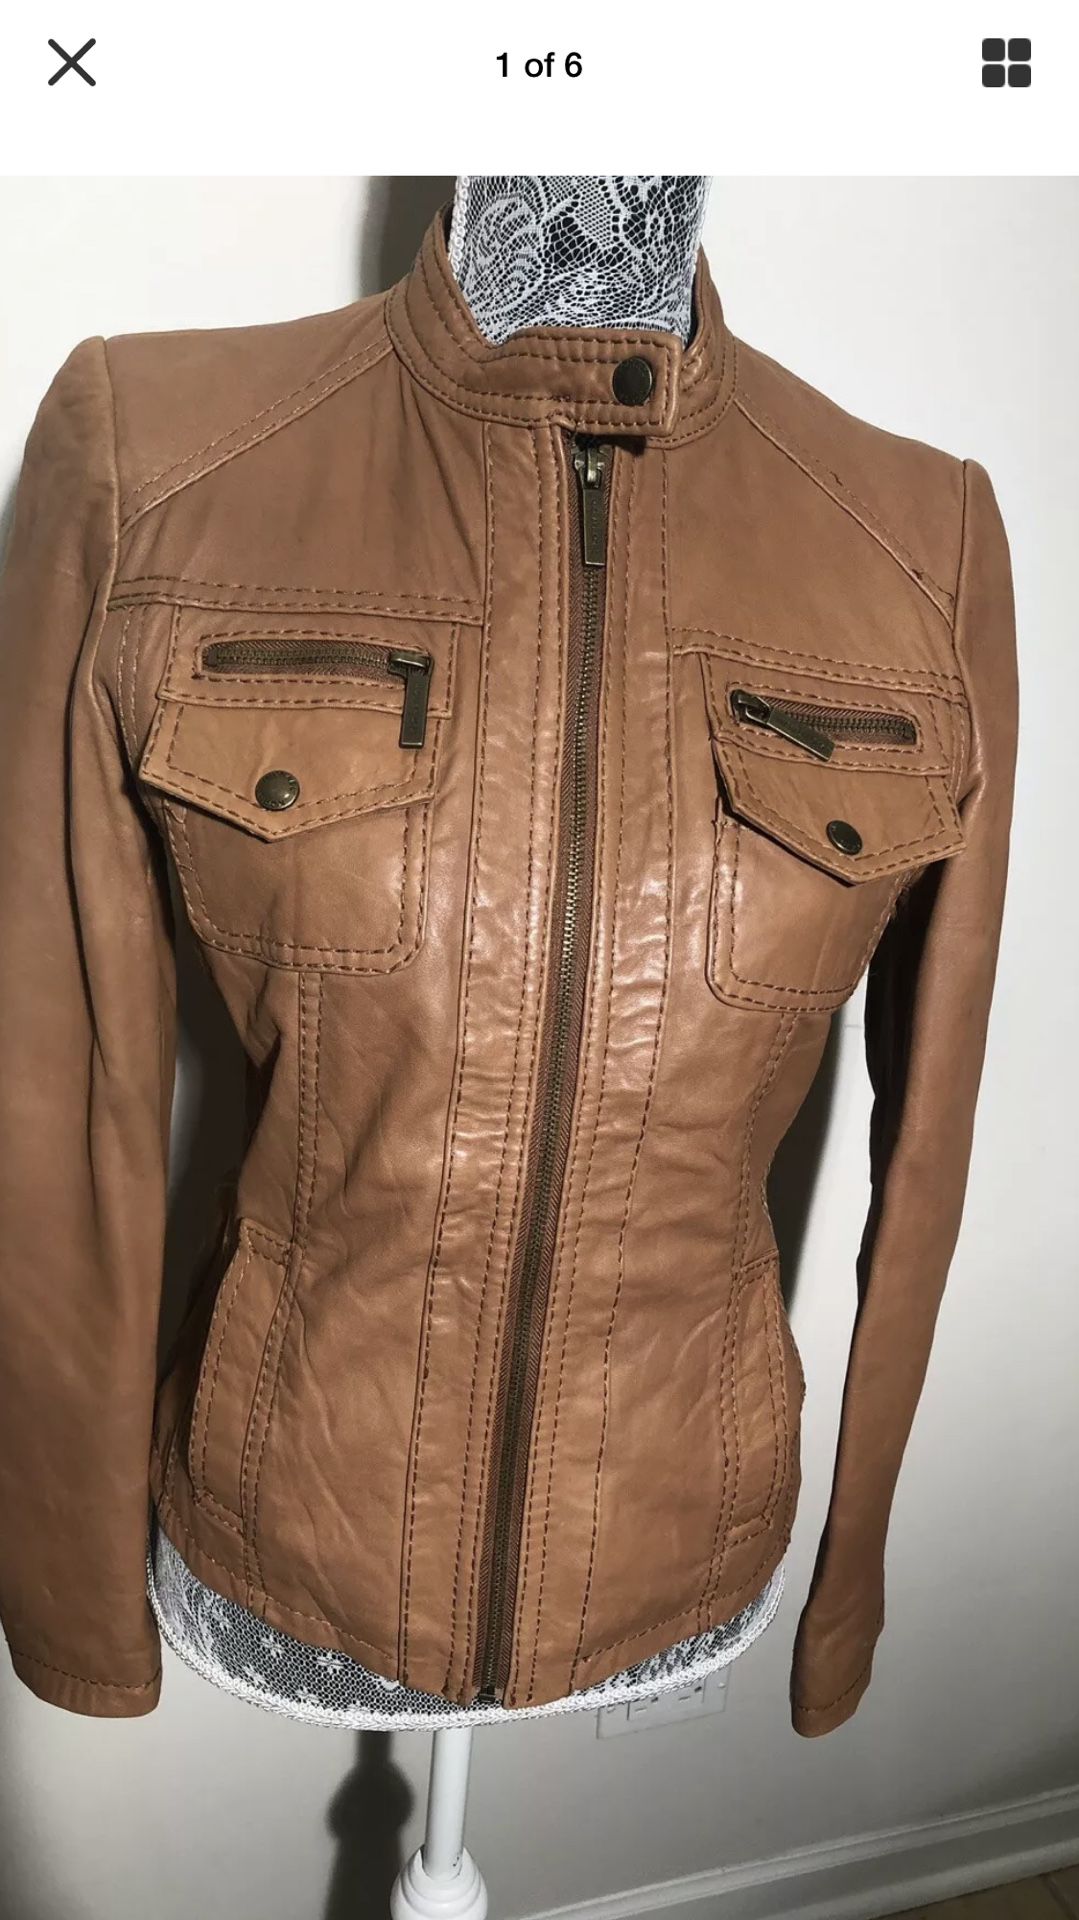 Michael Kors Leather Jacket